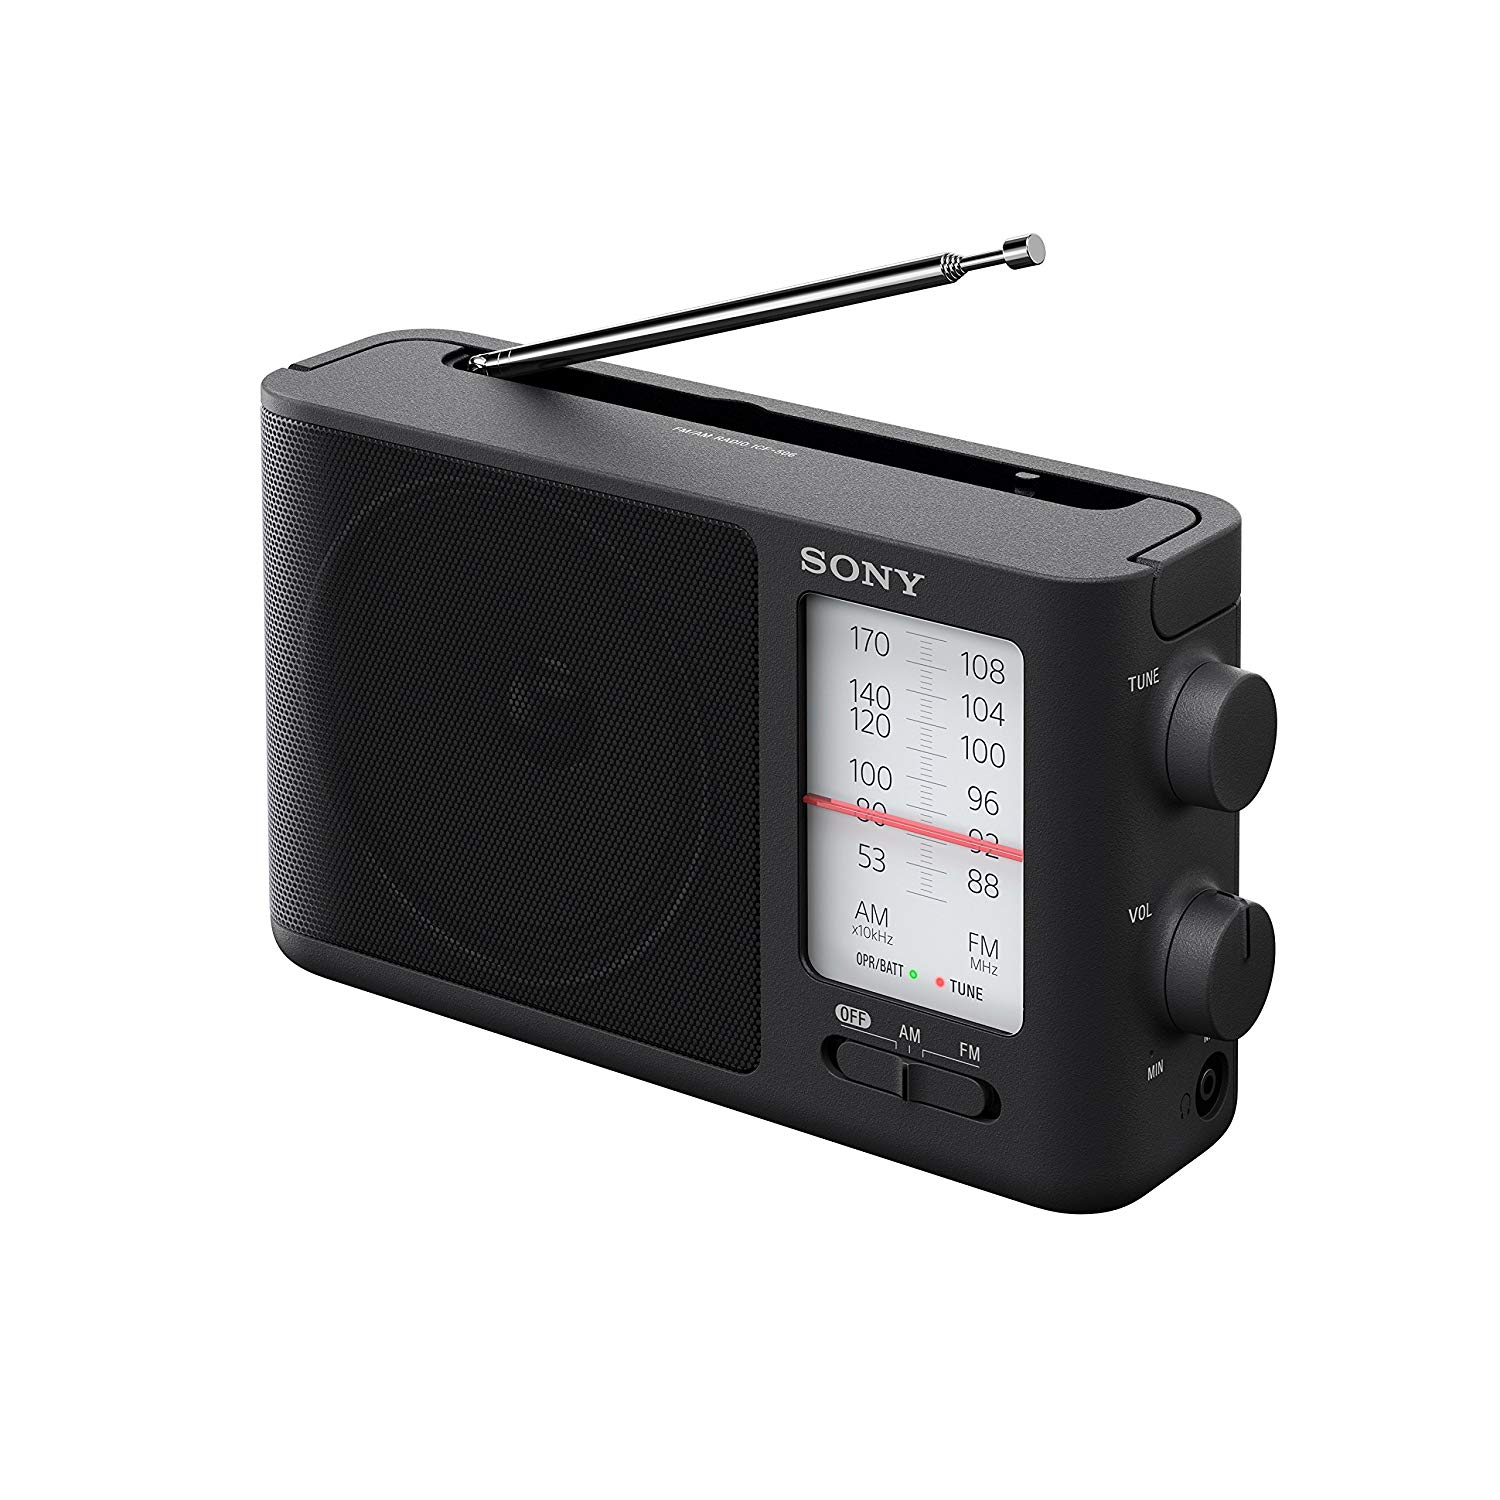 Sony Rádio FM / AM portátil com sintonização analógica ICF-506